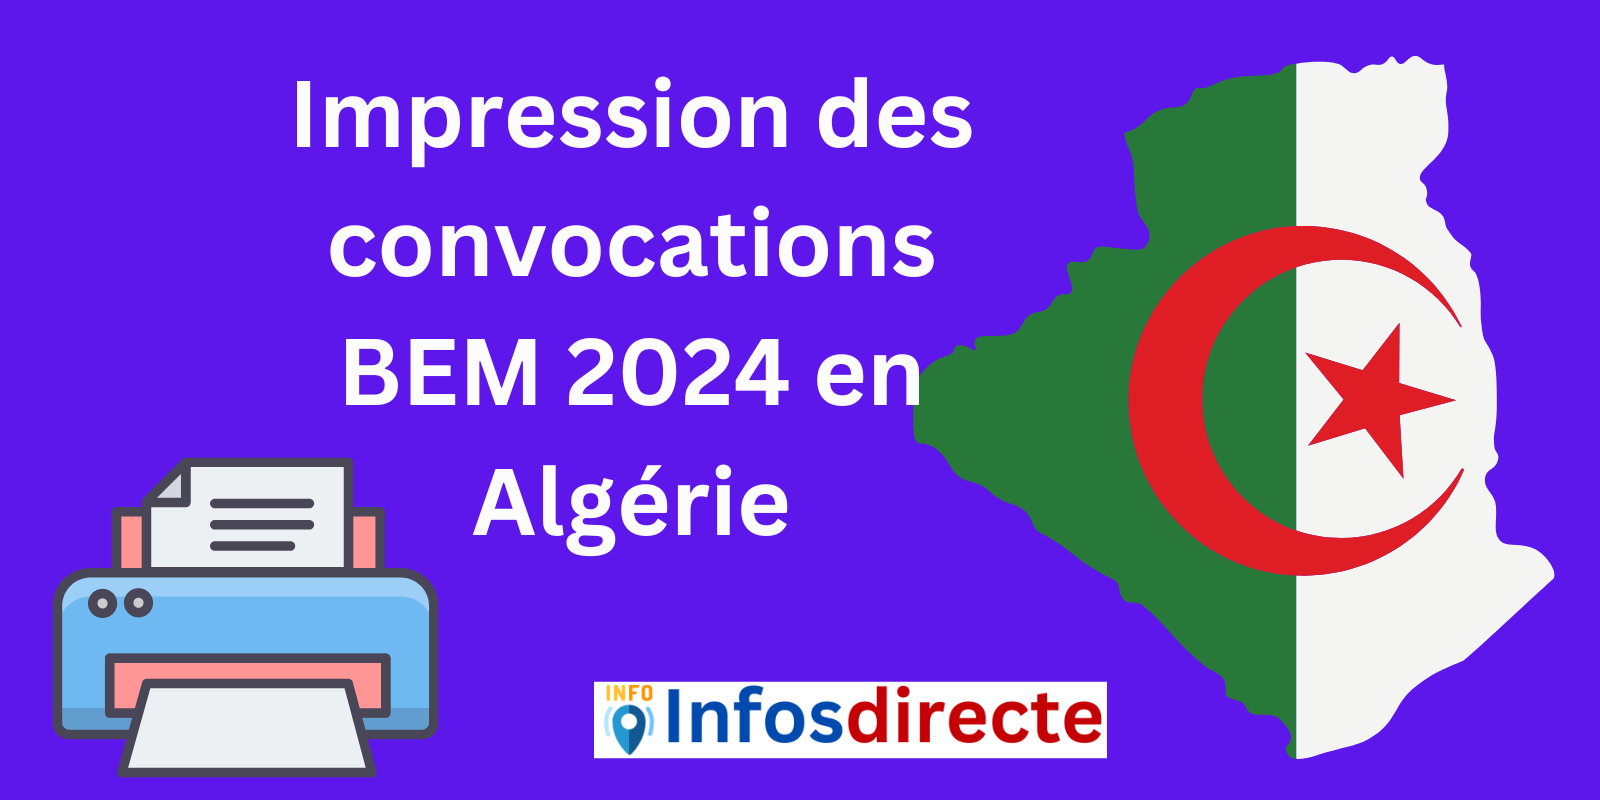 Impression des convocations BEM 2024 en Algérie